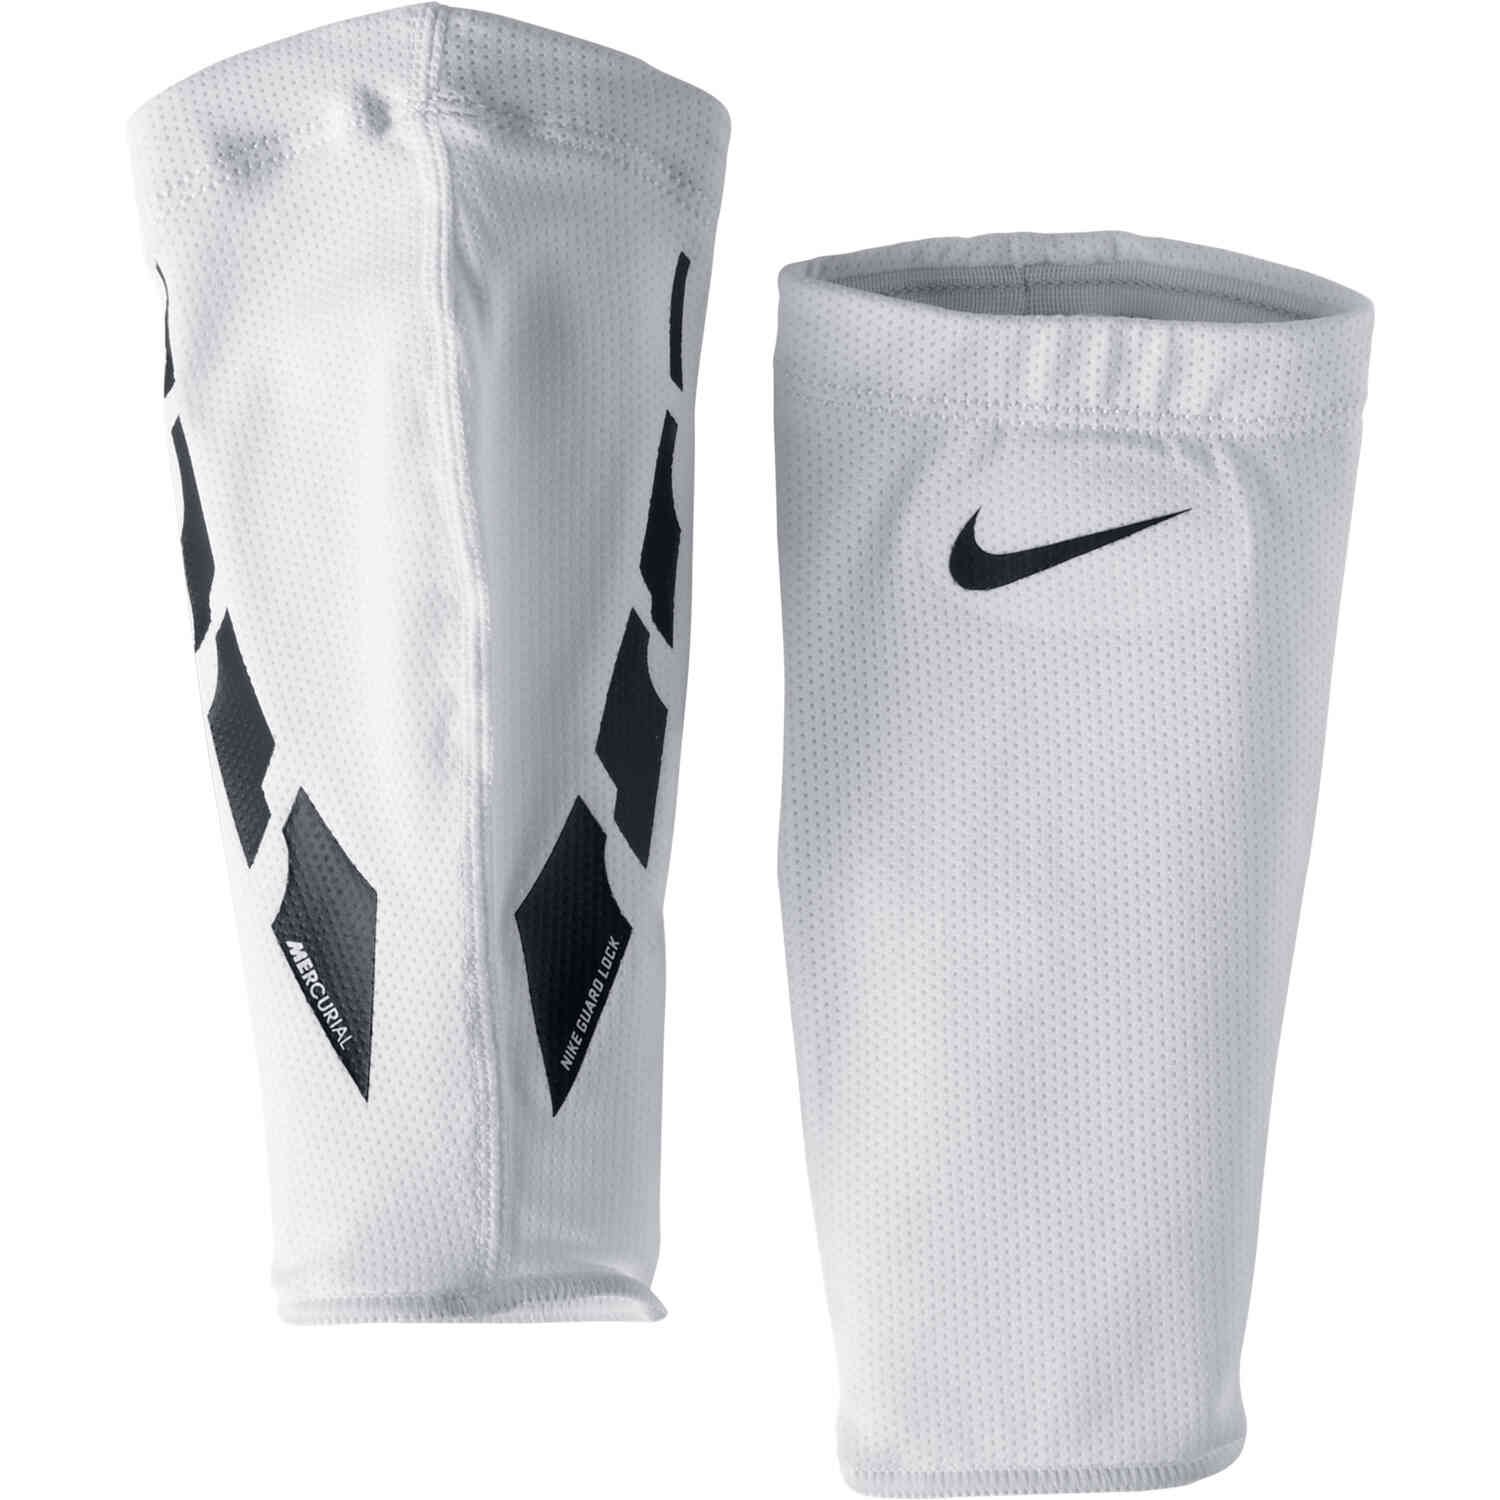 Nike Elite Guard Sleeves - White and Black Shin Guard Sleeves